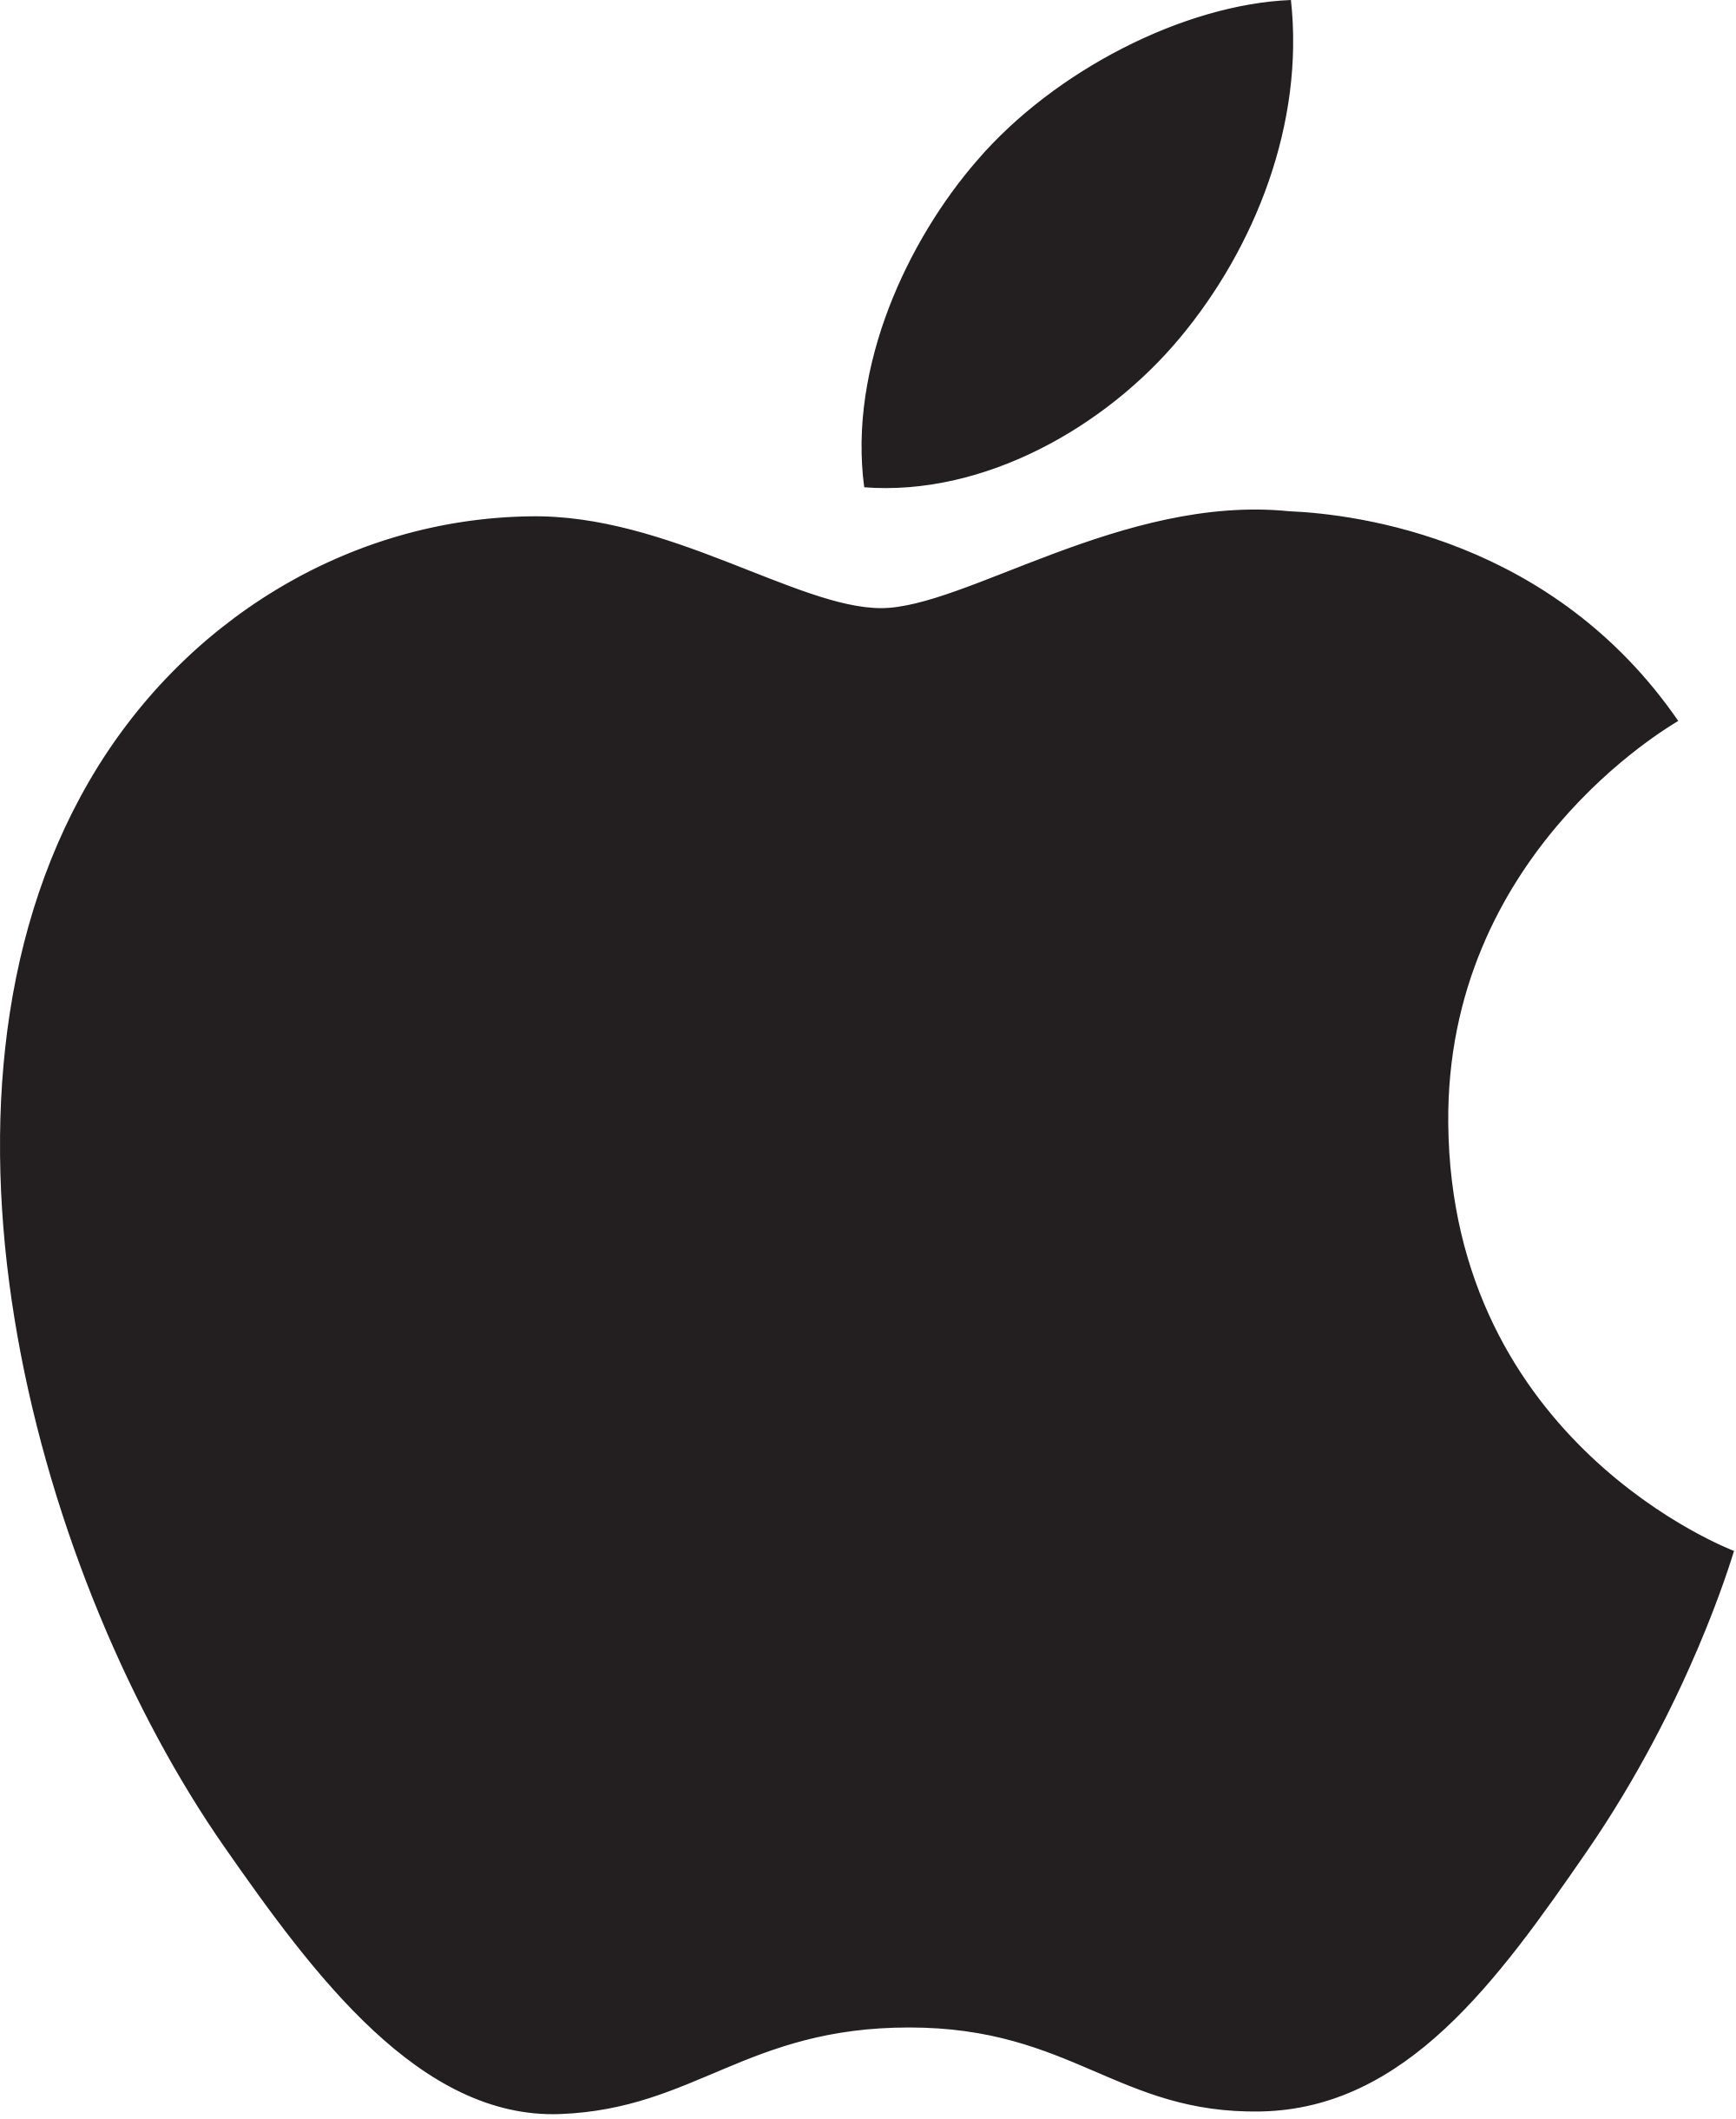 Image - Apple 1998 Logo.png | Logopedia | Fandom powered by Wikia